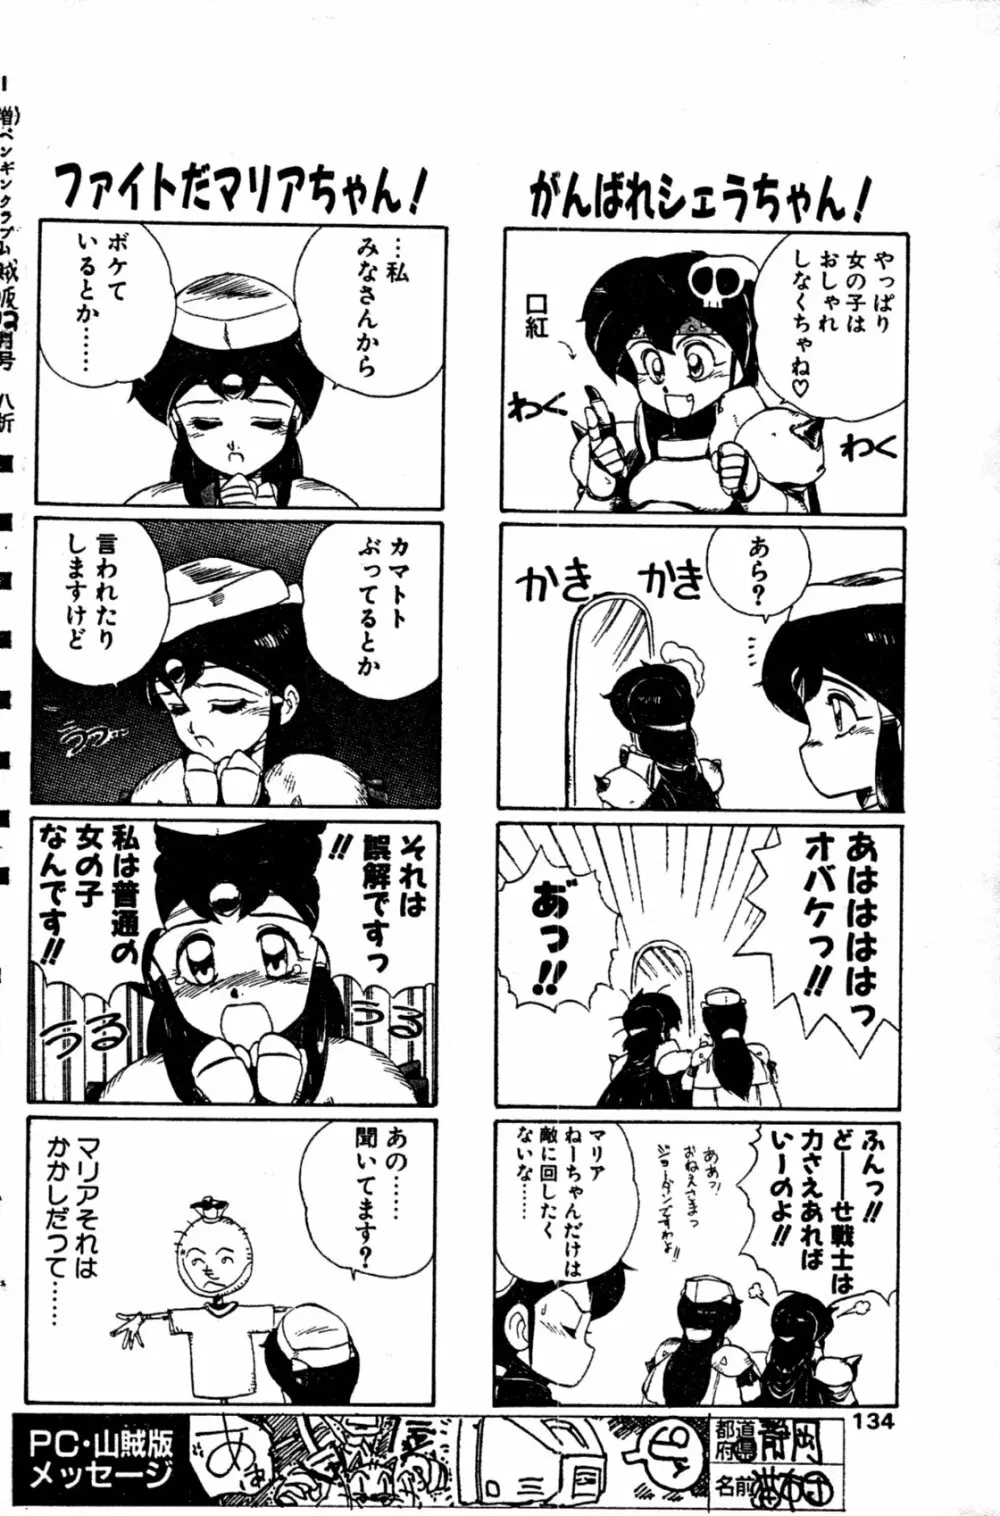 COMIC ペンギンクラブ山賊版 1991年12月号増刊 NARCIS3 幻超二&飛龍乱特集号 129ページ